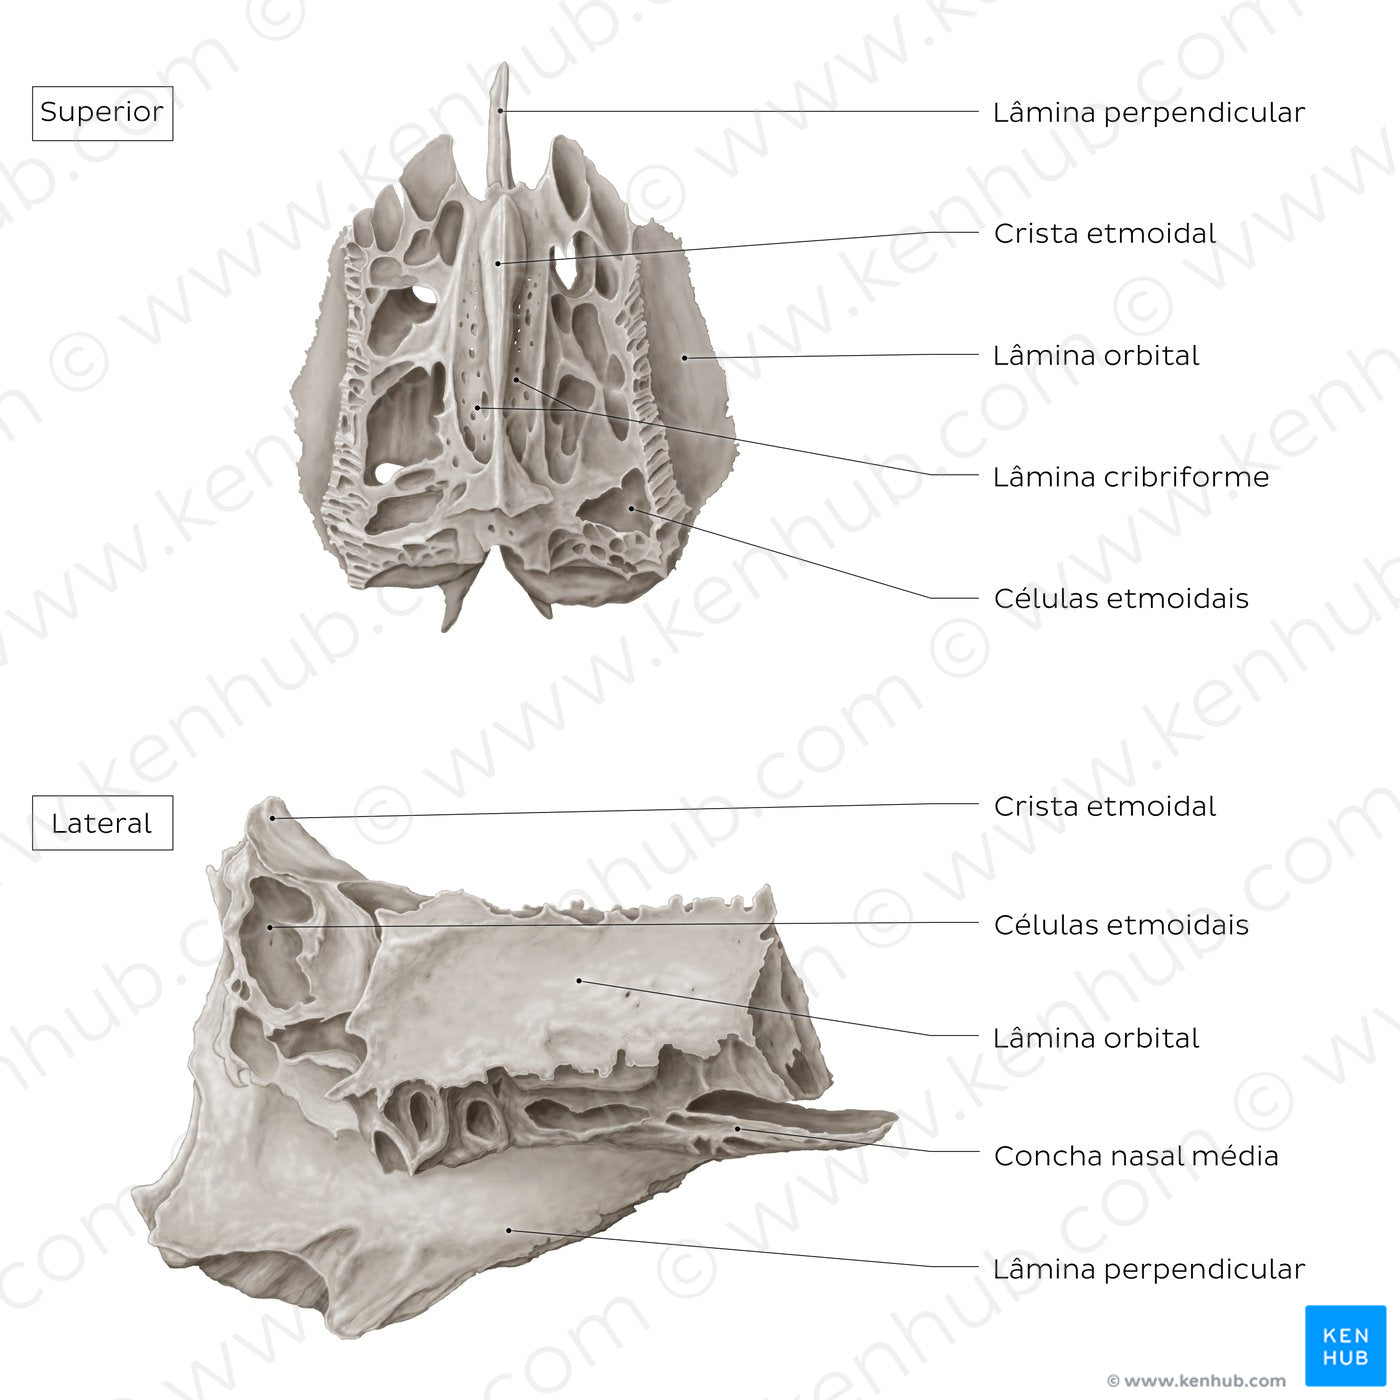 Ethmoid bone (superior and lateral views) (Portuguese)